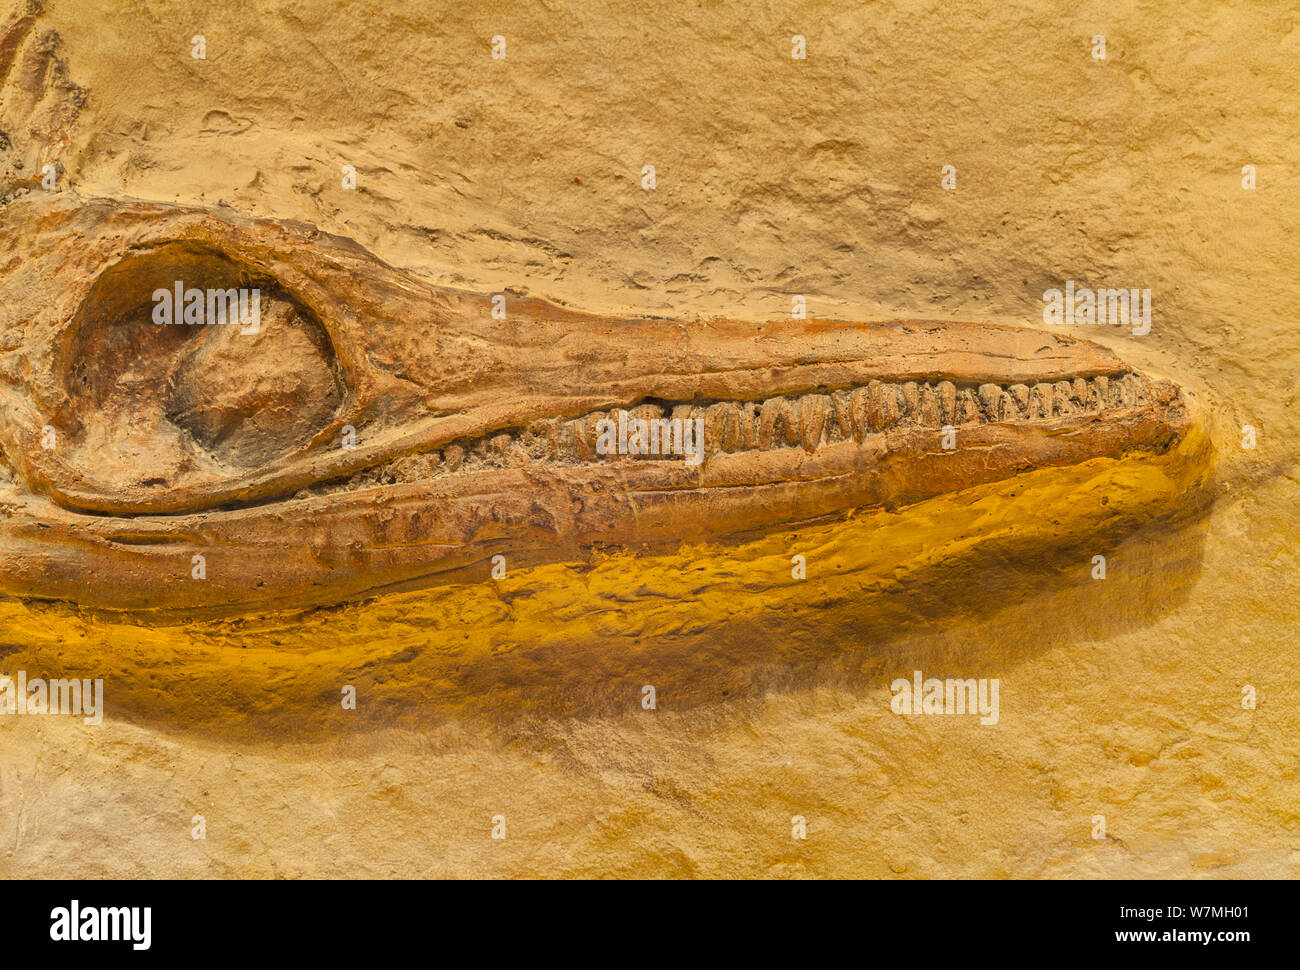 Fossil of prehistoric marine reptile Plesiosaur (Plesiosauria) showing skull, jaws, eyes and teeth, Spain Stock Photo